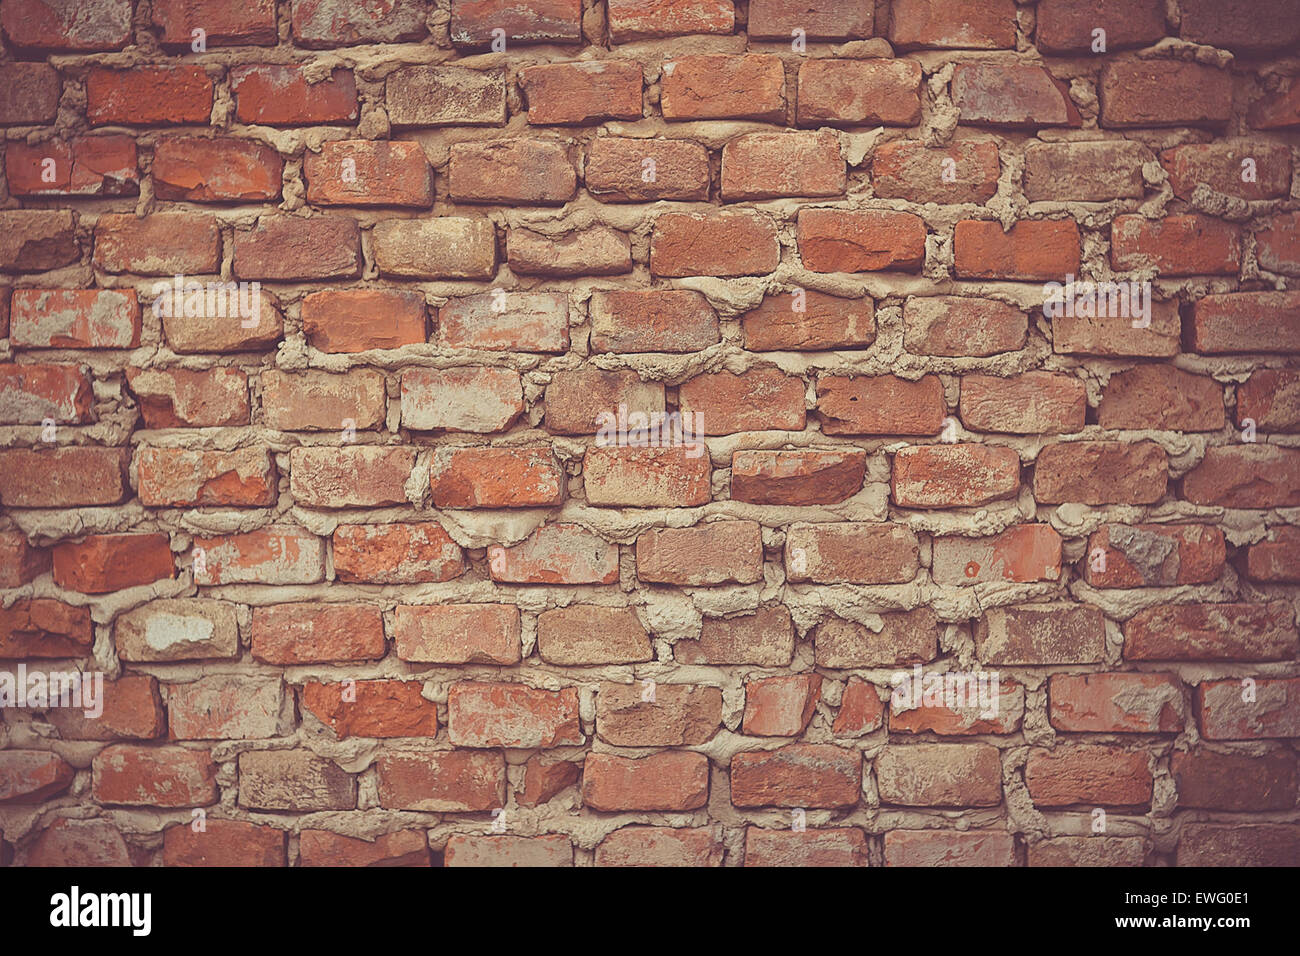 Brick Wall with Mortar Stock Photo